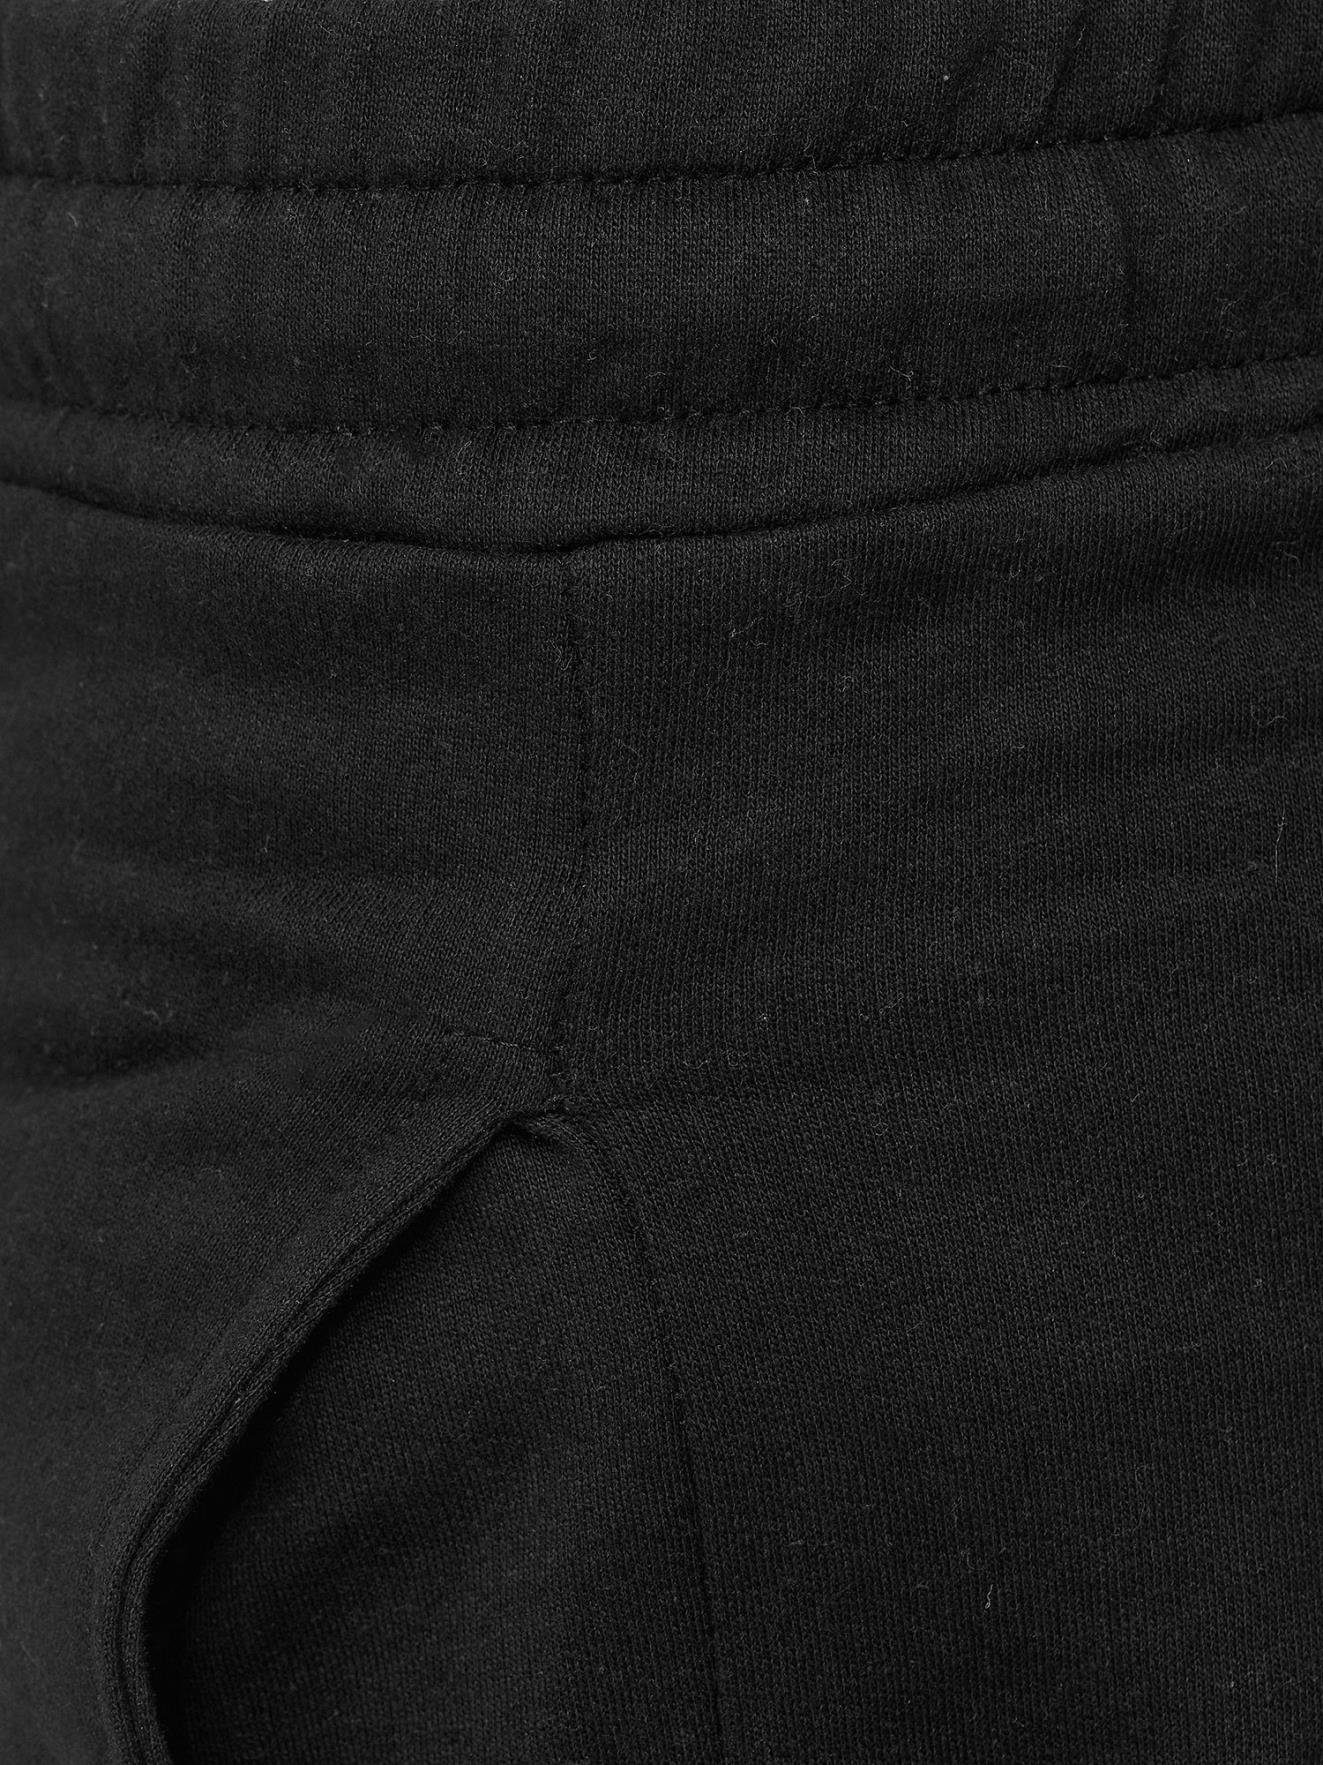 Schlicht (1-tlg) Jogginghose Einfarbig Männer Herren Basic Code47 Trainings schwarz Sporthose Jogginghose